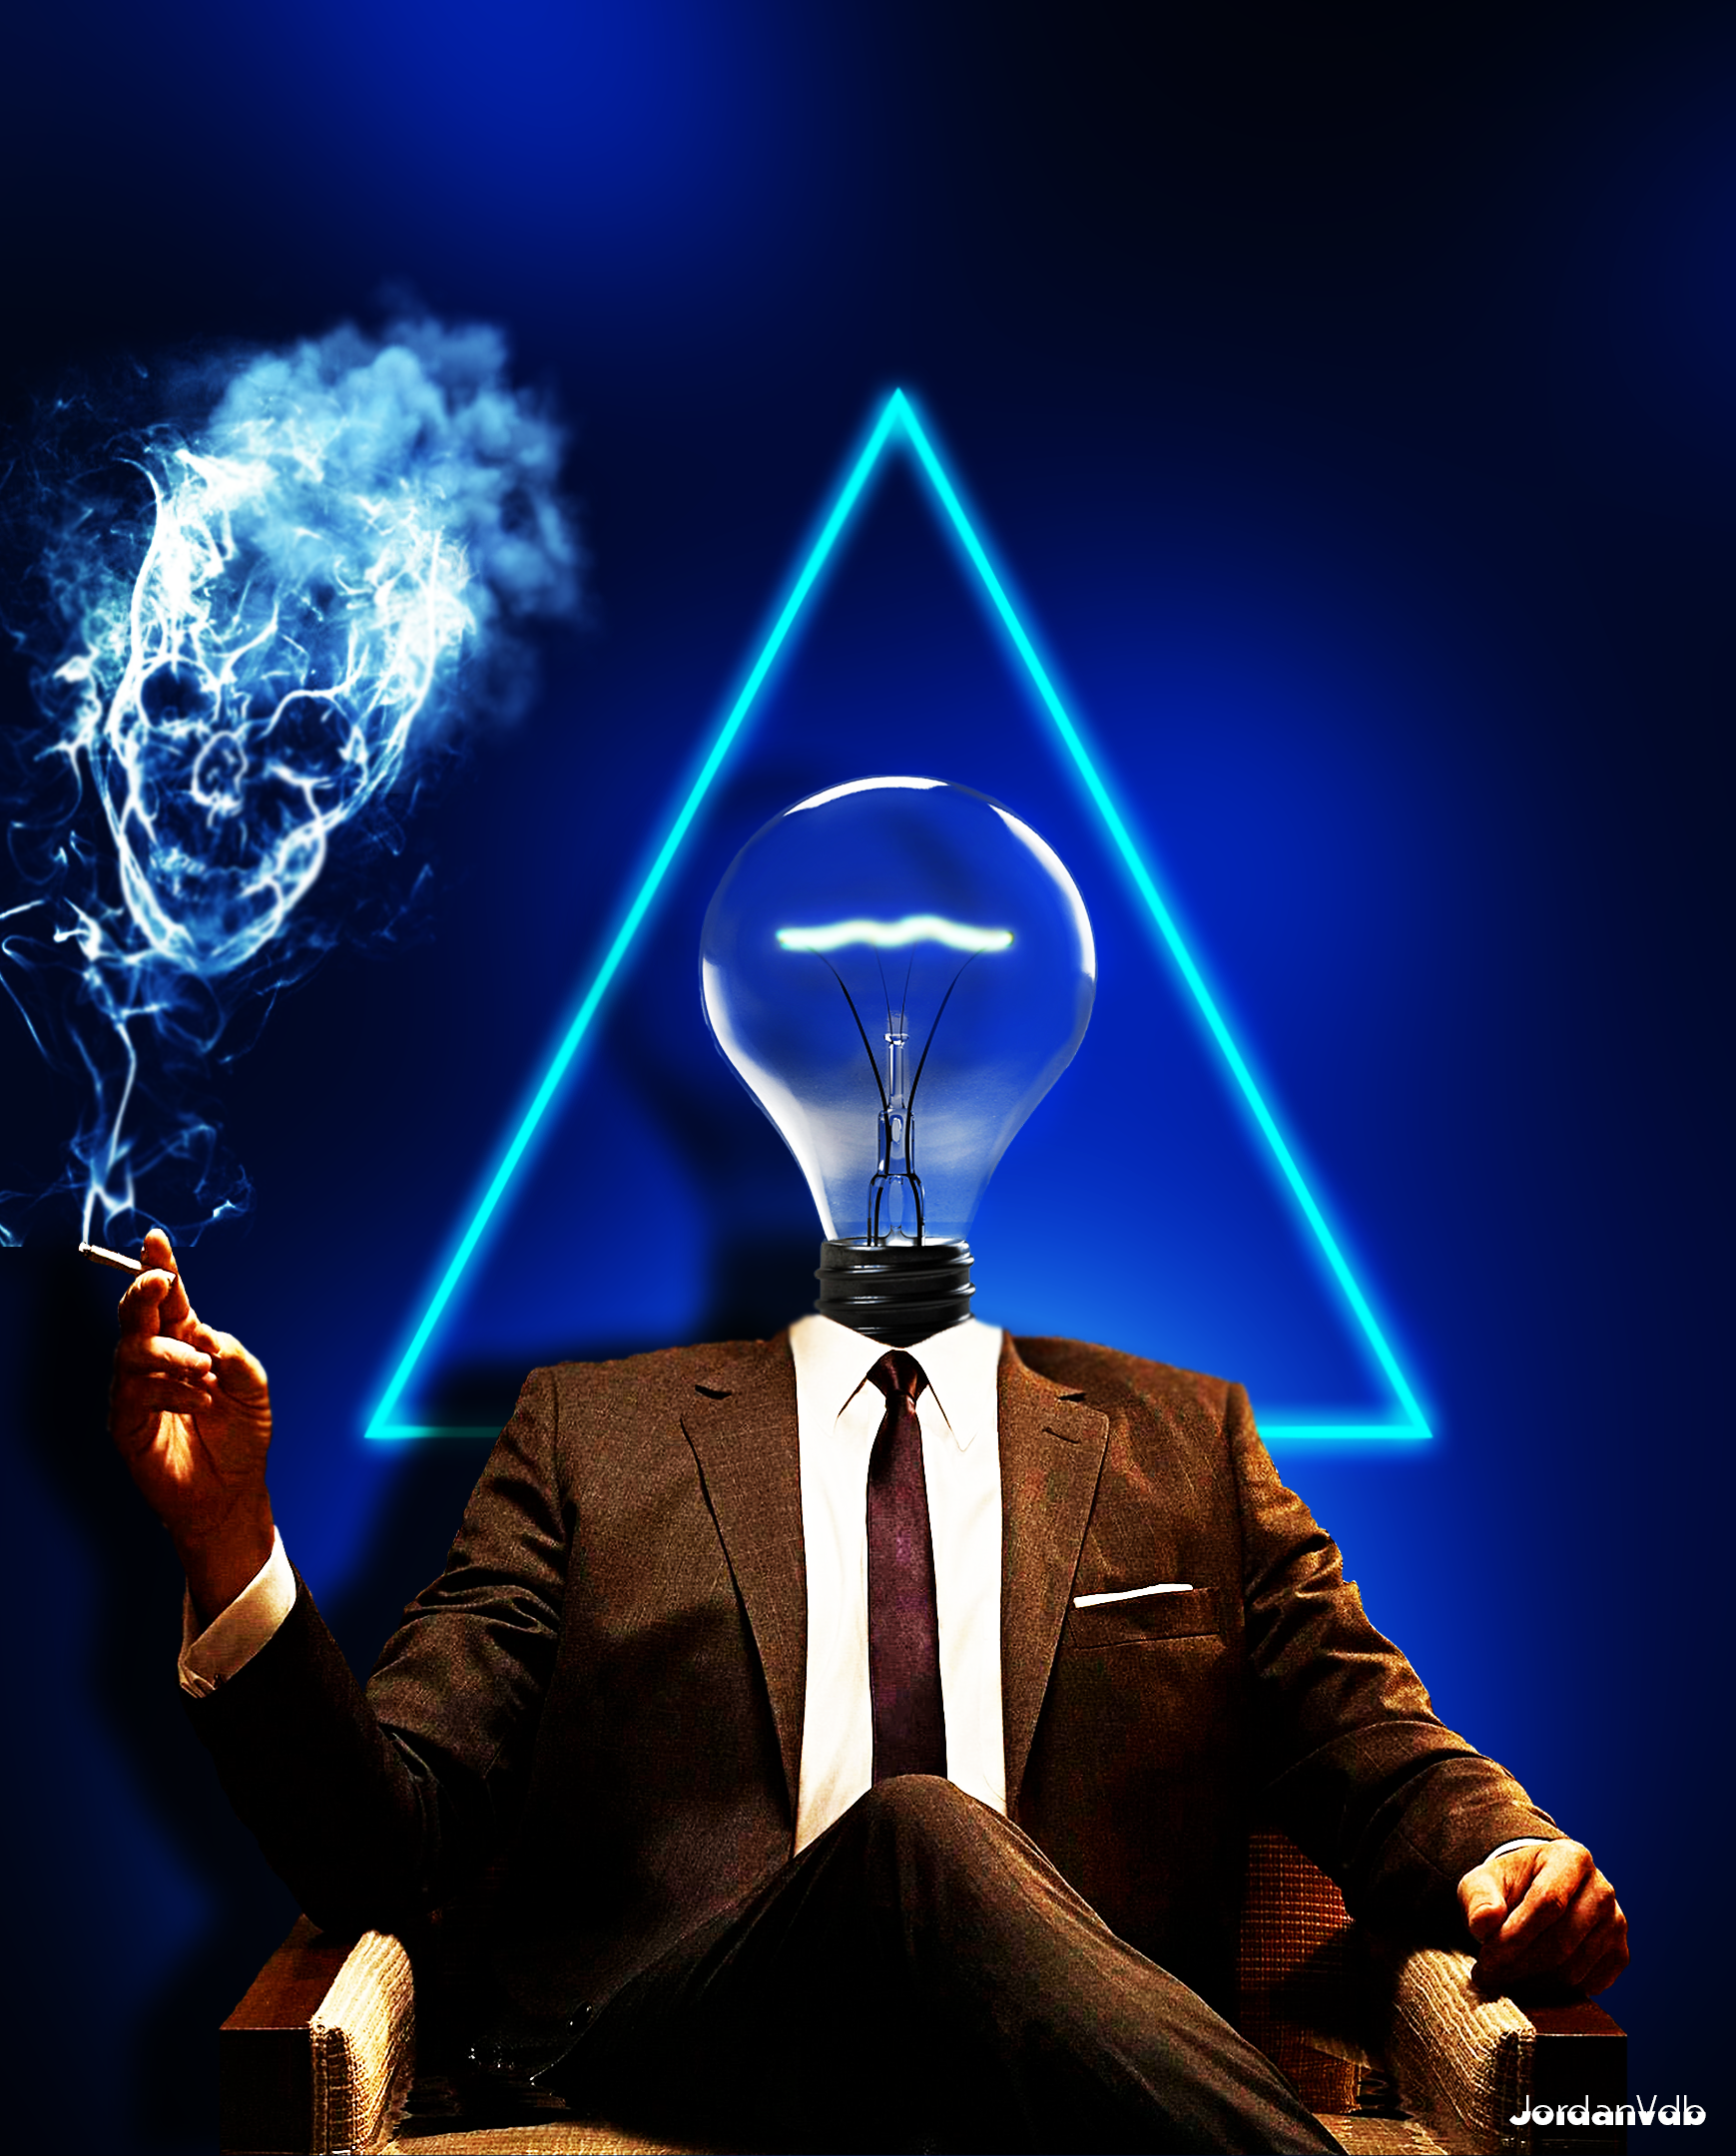 Photo Manipulation Imagination Illuminati Blue Triangle Skull Smoke Don Draper Suits Blue Background 1739x2160